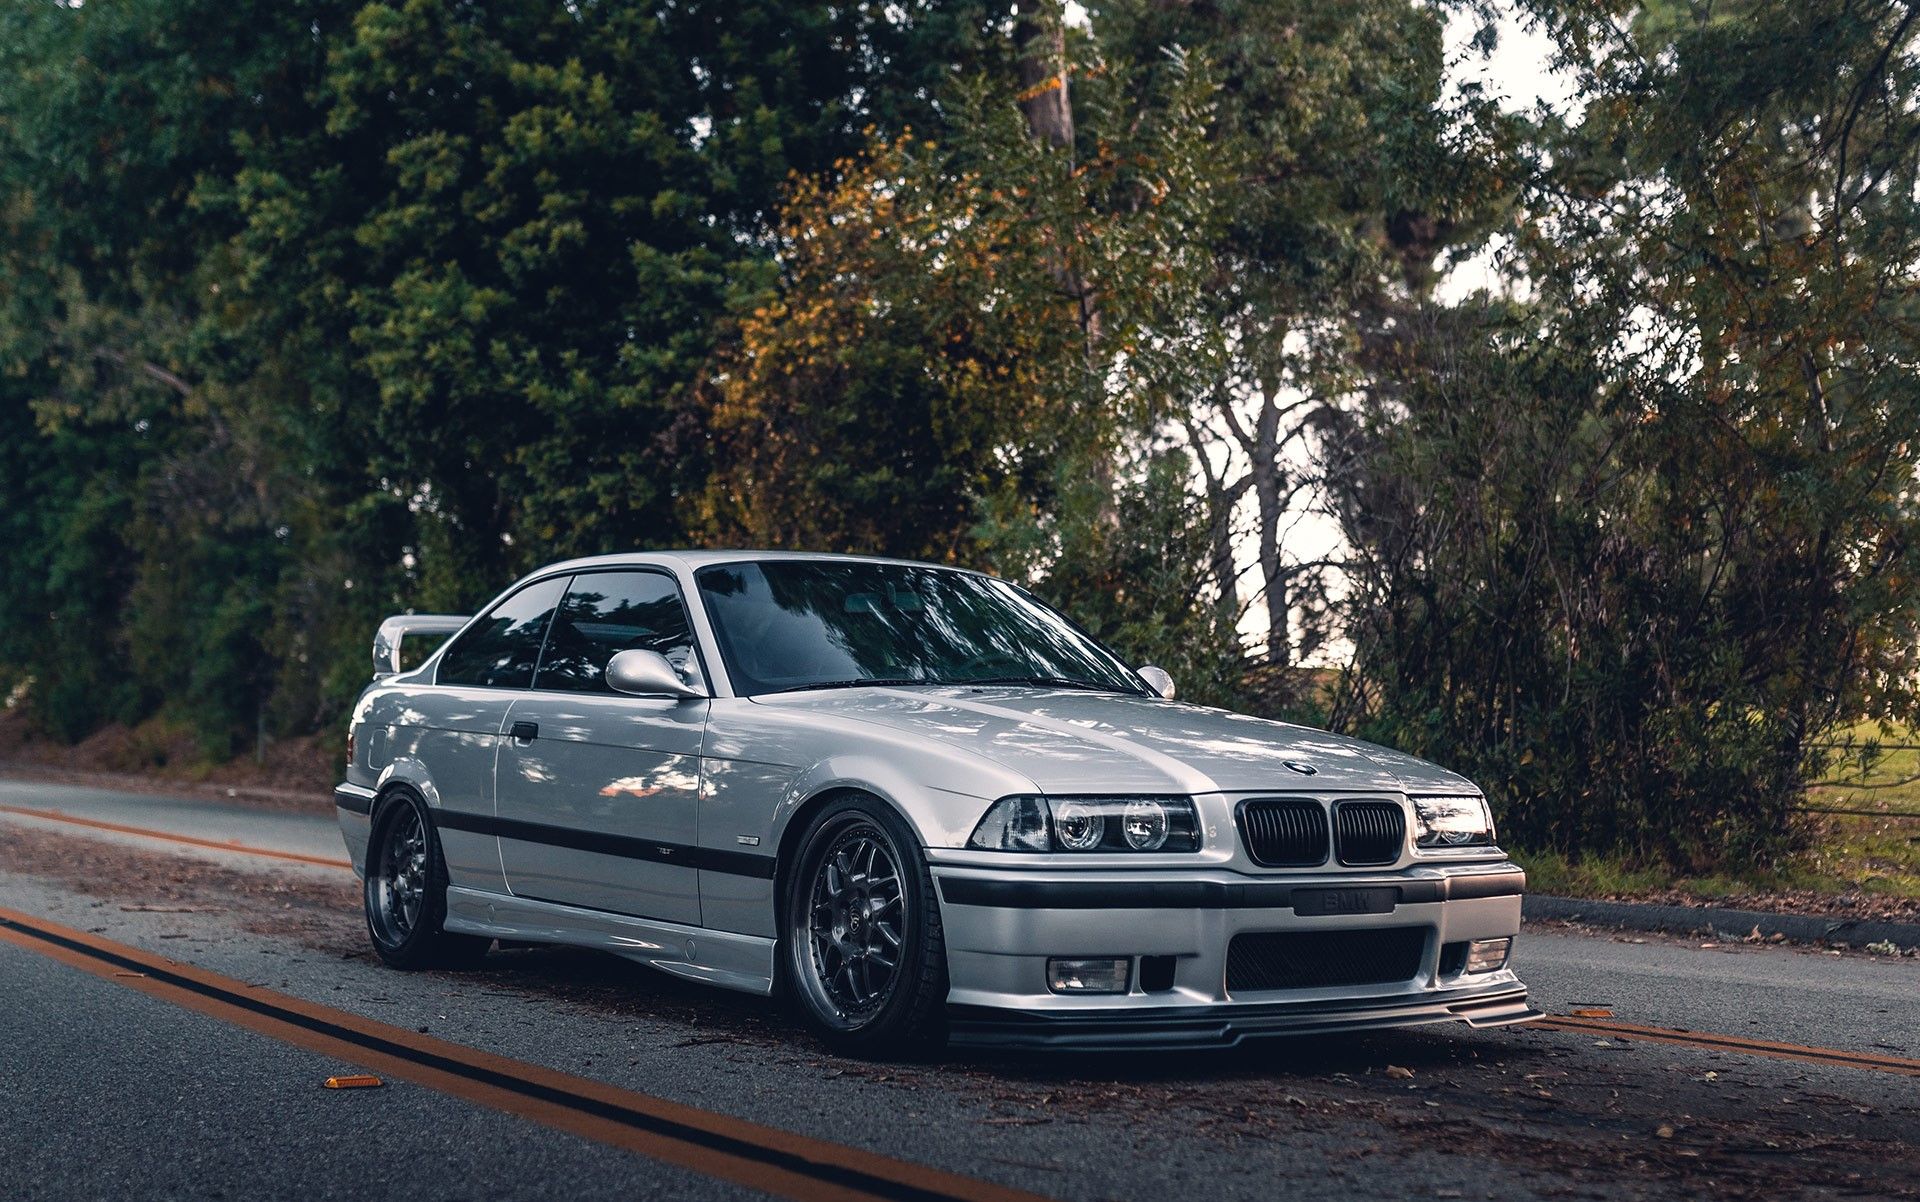 BMW 3-Series (E36)